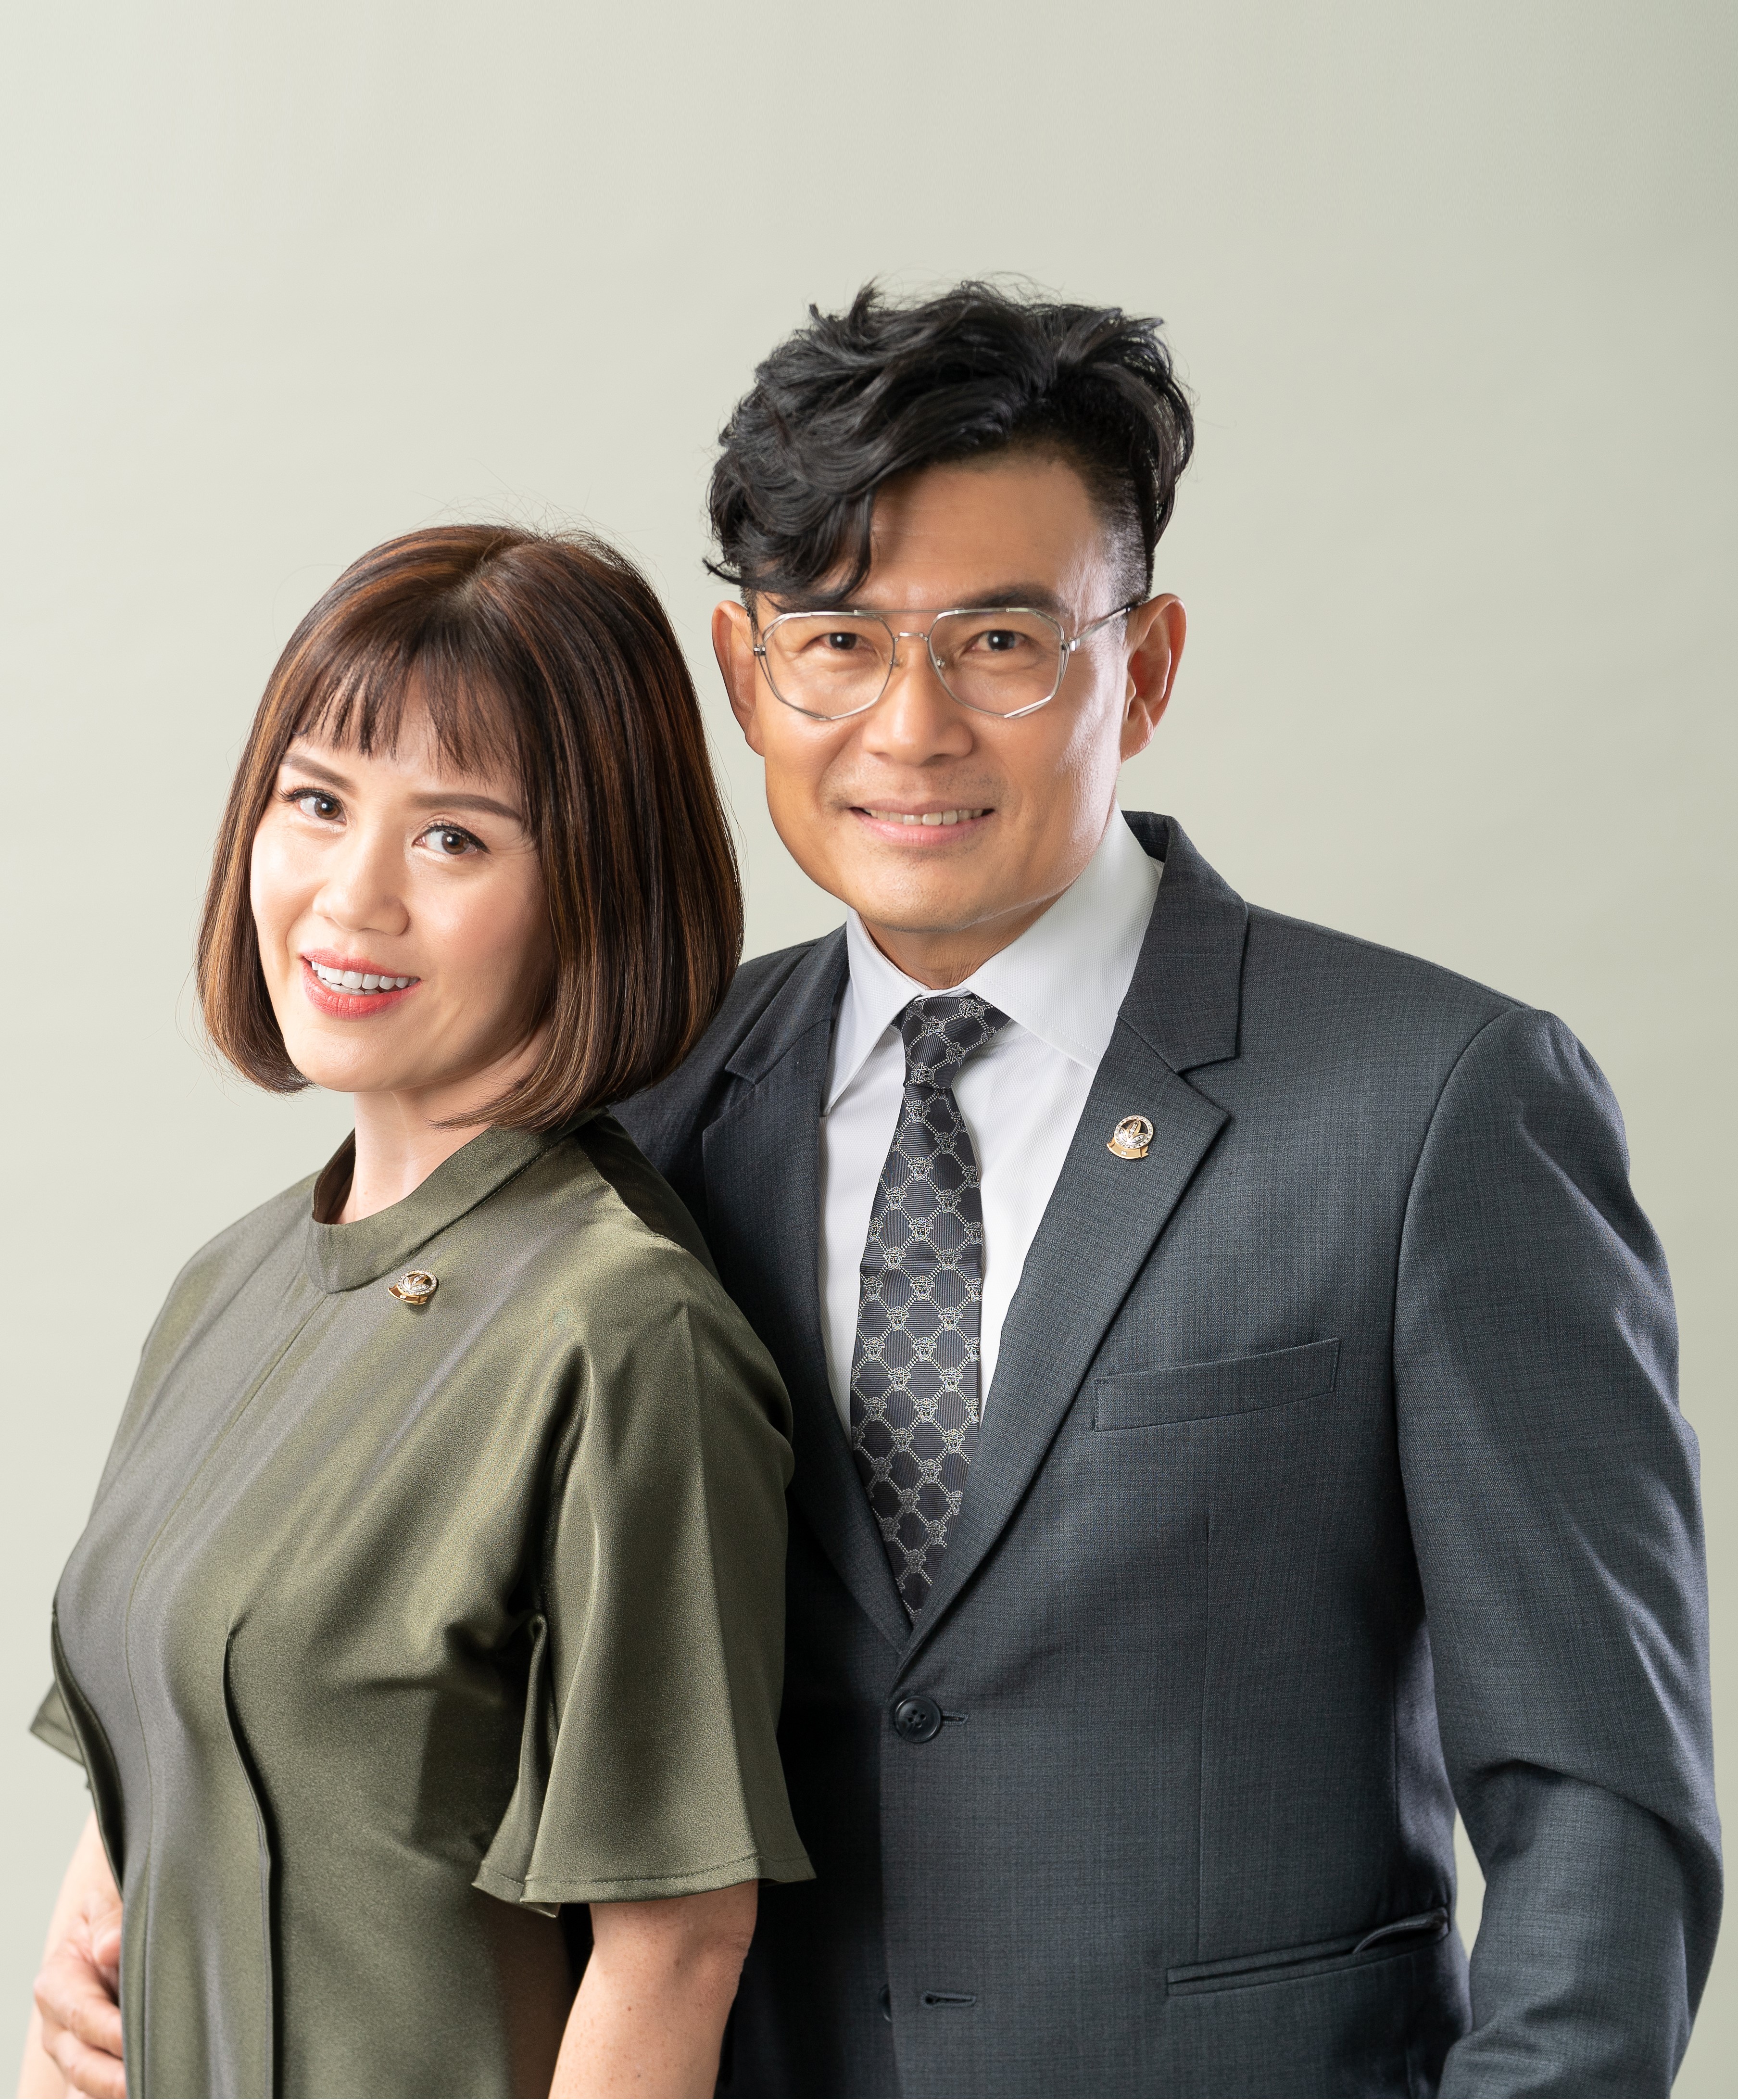 Daniel Tan and Jessica Hong Headshot Ms